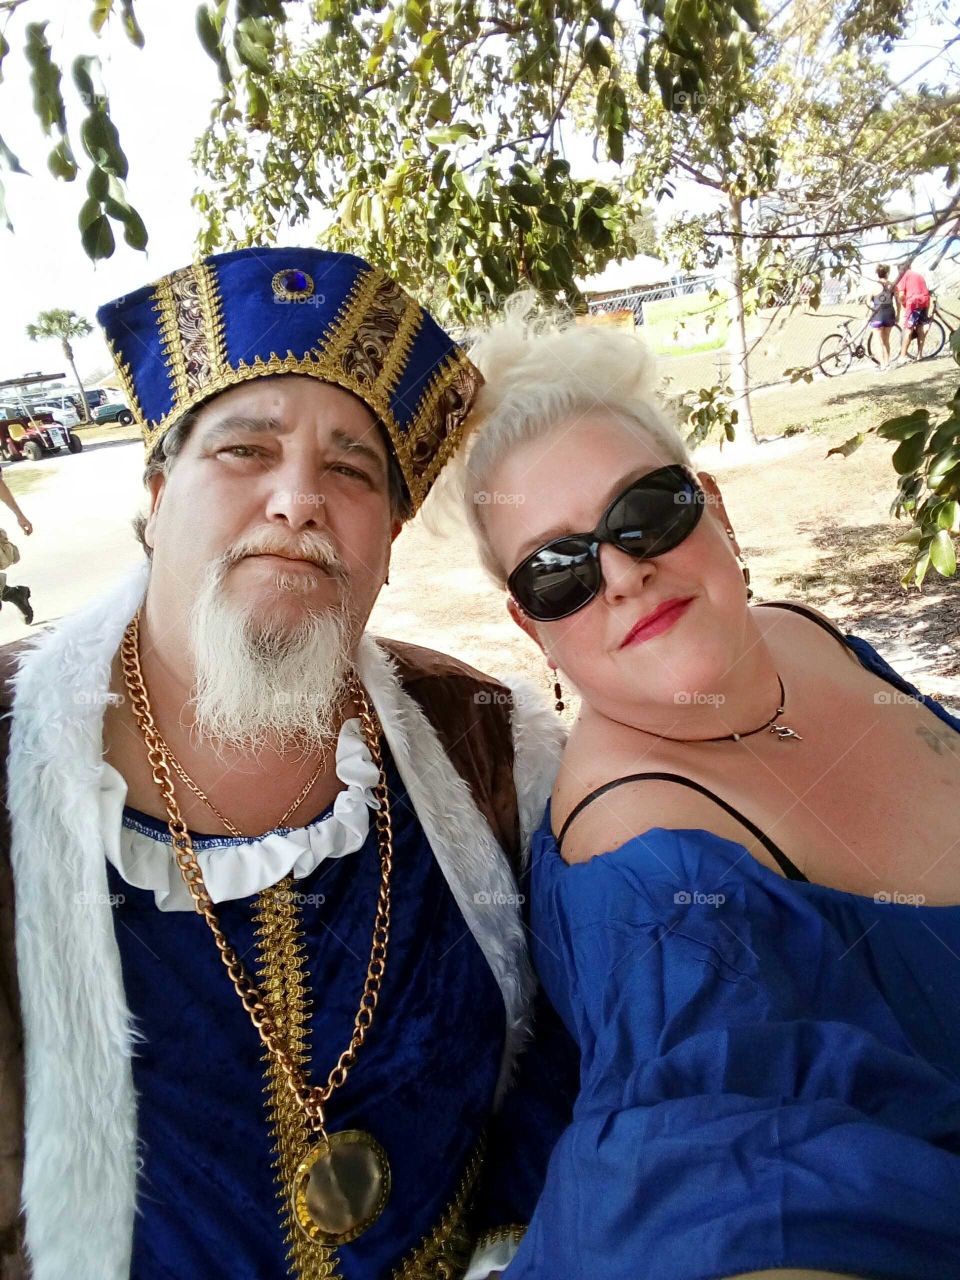 The Florida Renaissance Festival